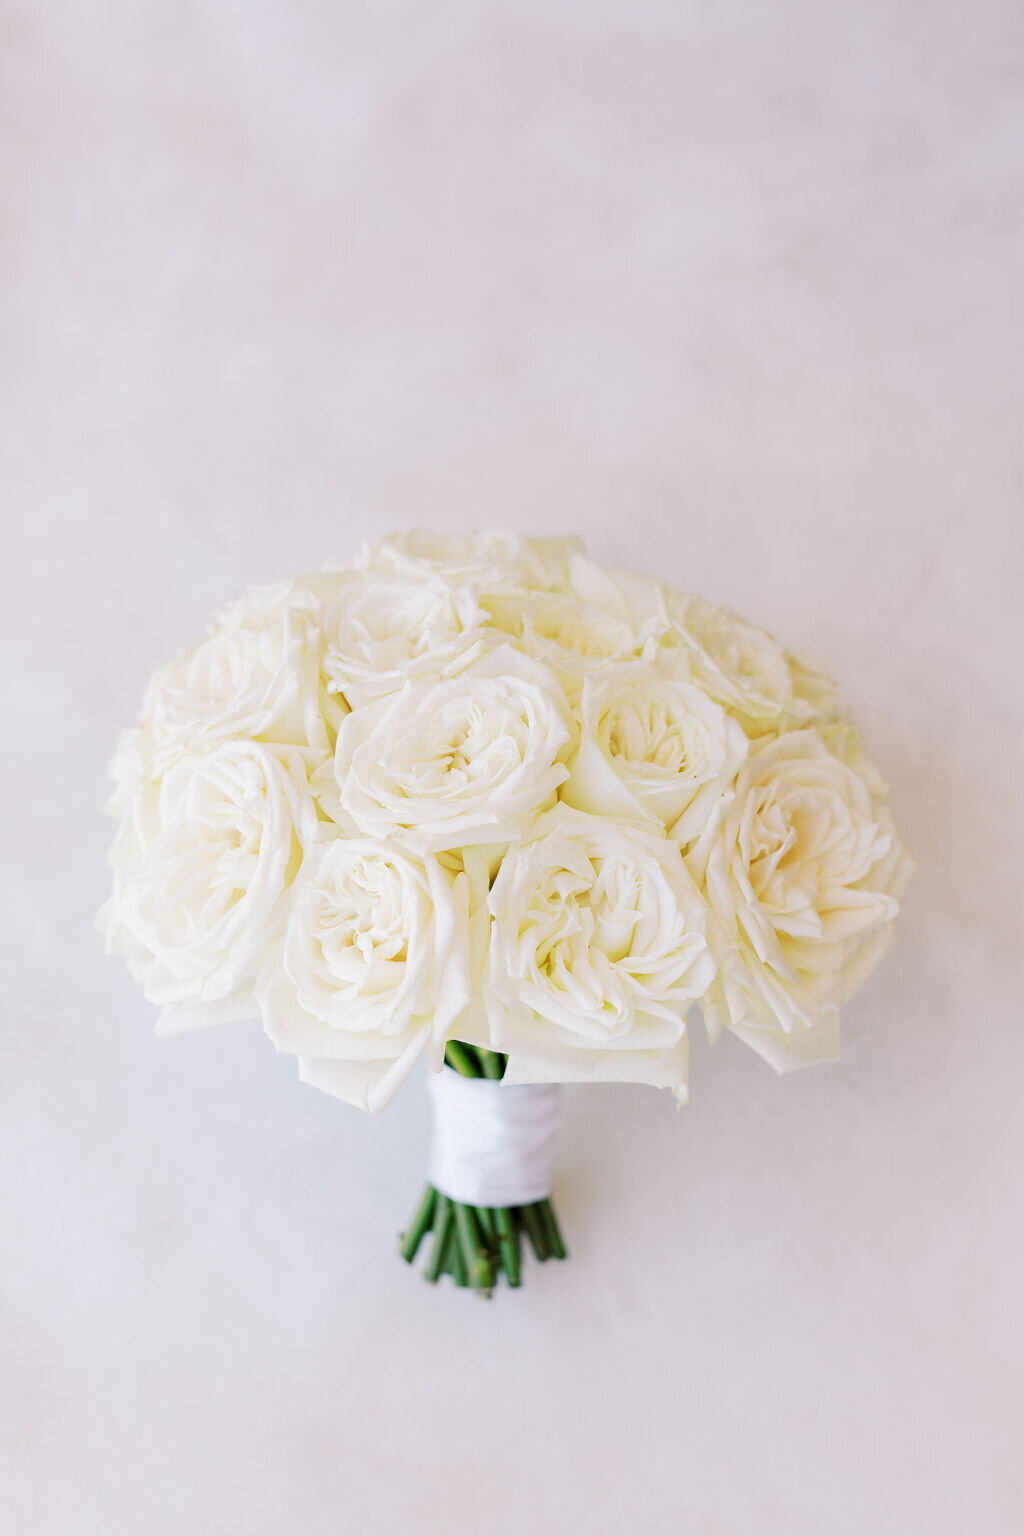 Classic white rose bouquet by Eden's Echo San Antonio Wedding Florist